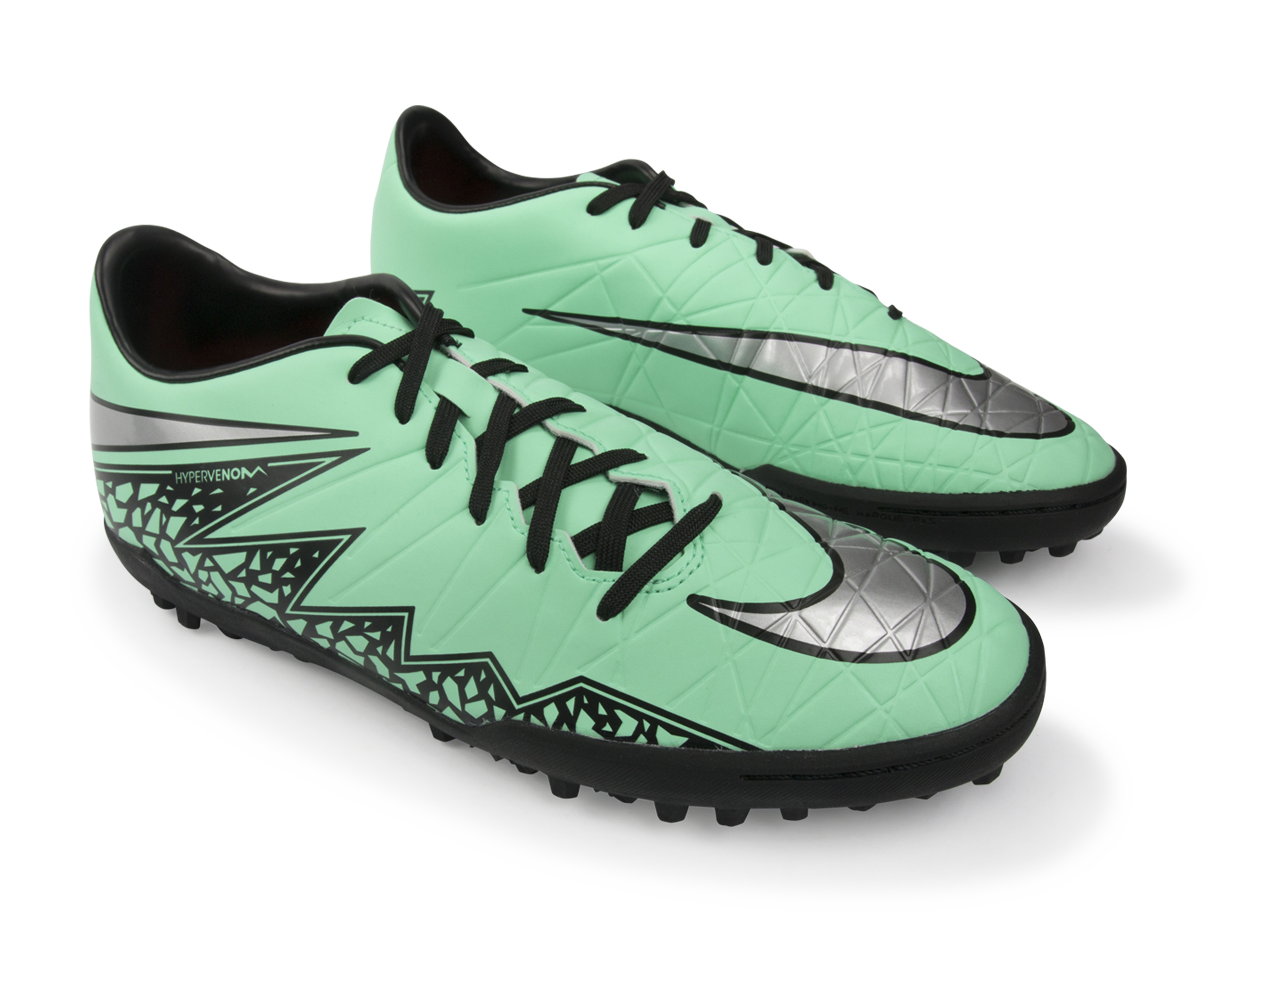 Nike Men's Hypervenom Phelon Turf Soccer Shoes Green Glow/Metallic Silver/Hyper Orange